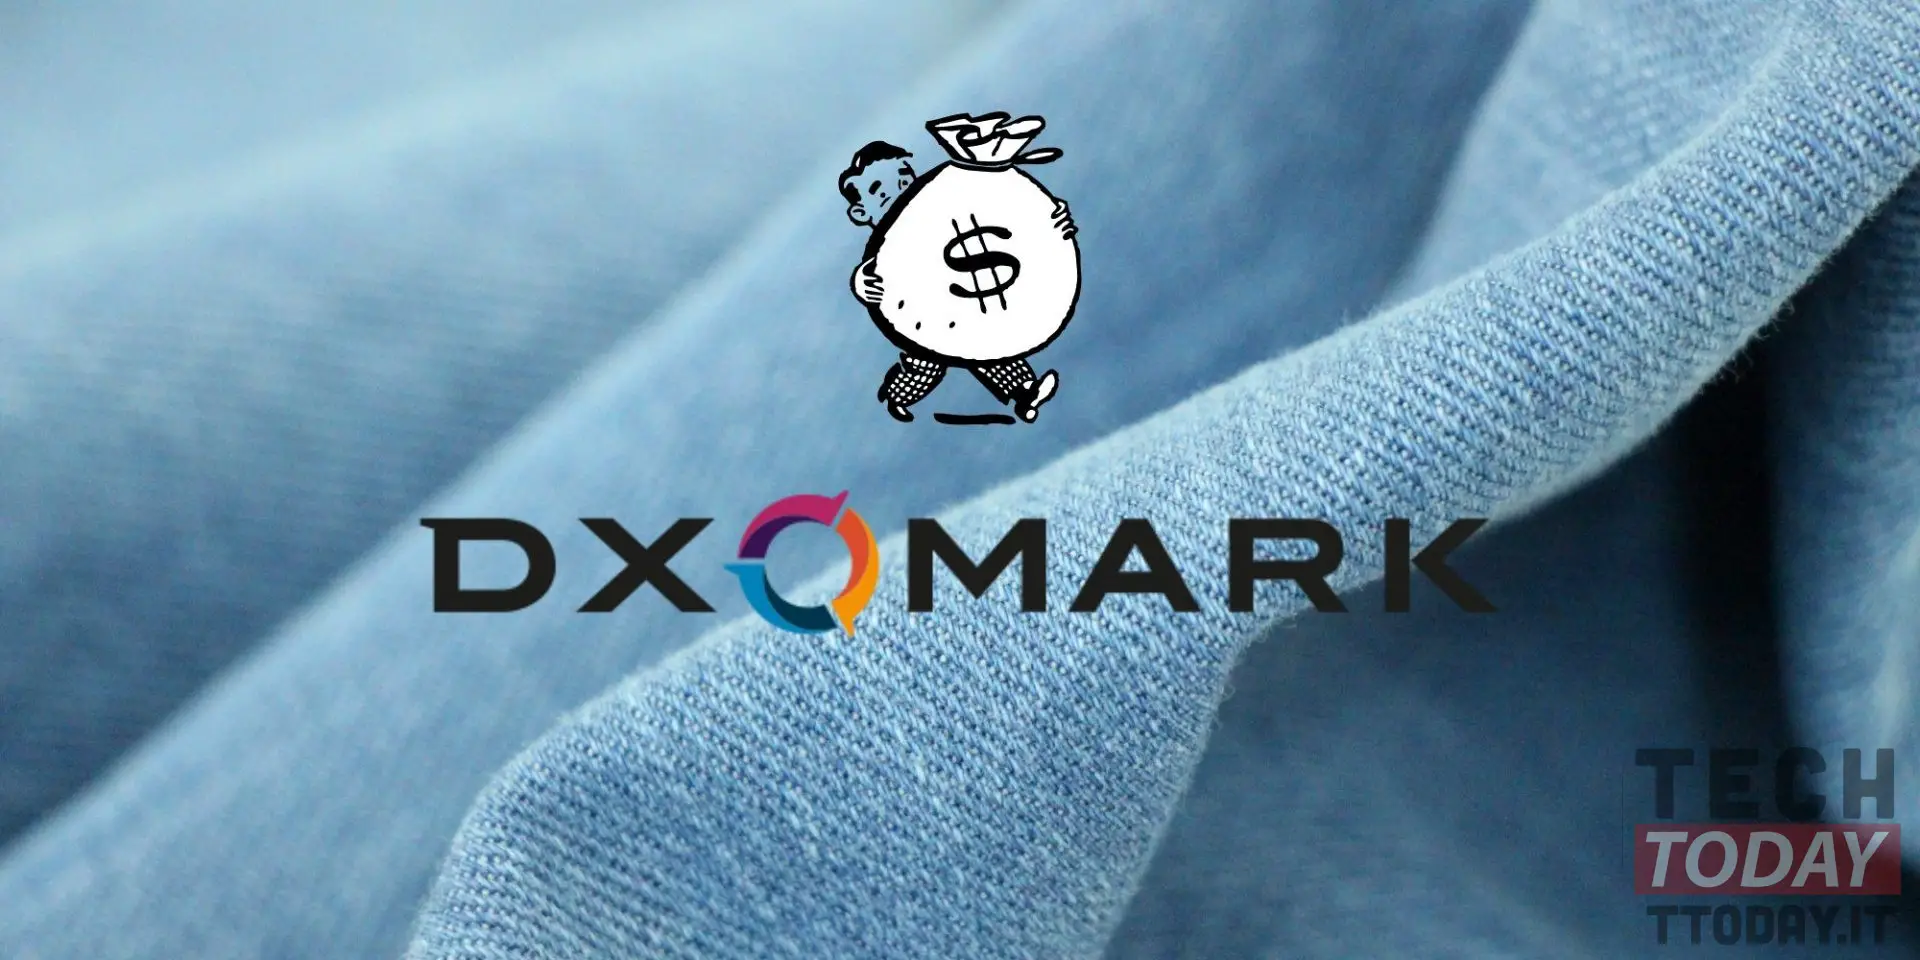 dxomark inserts the segmentation and the price of smartphones